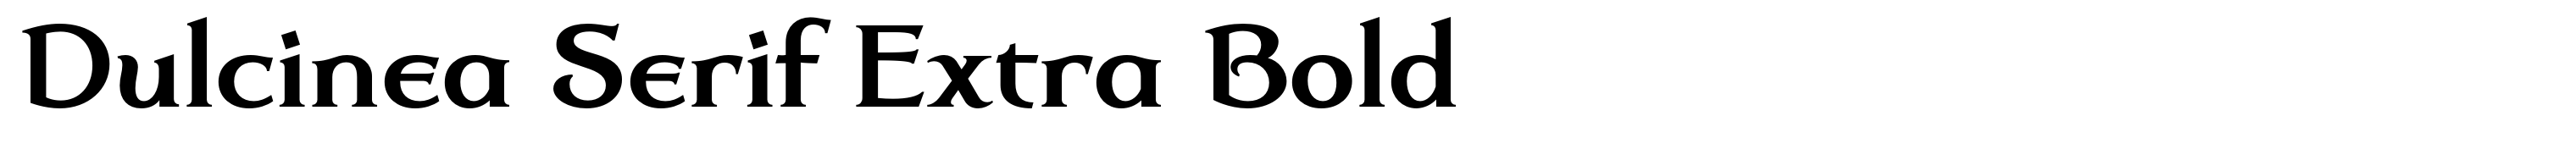 Dulcinea Serif Extra Bold